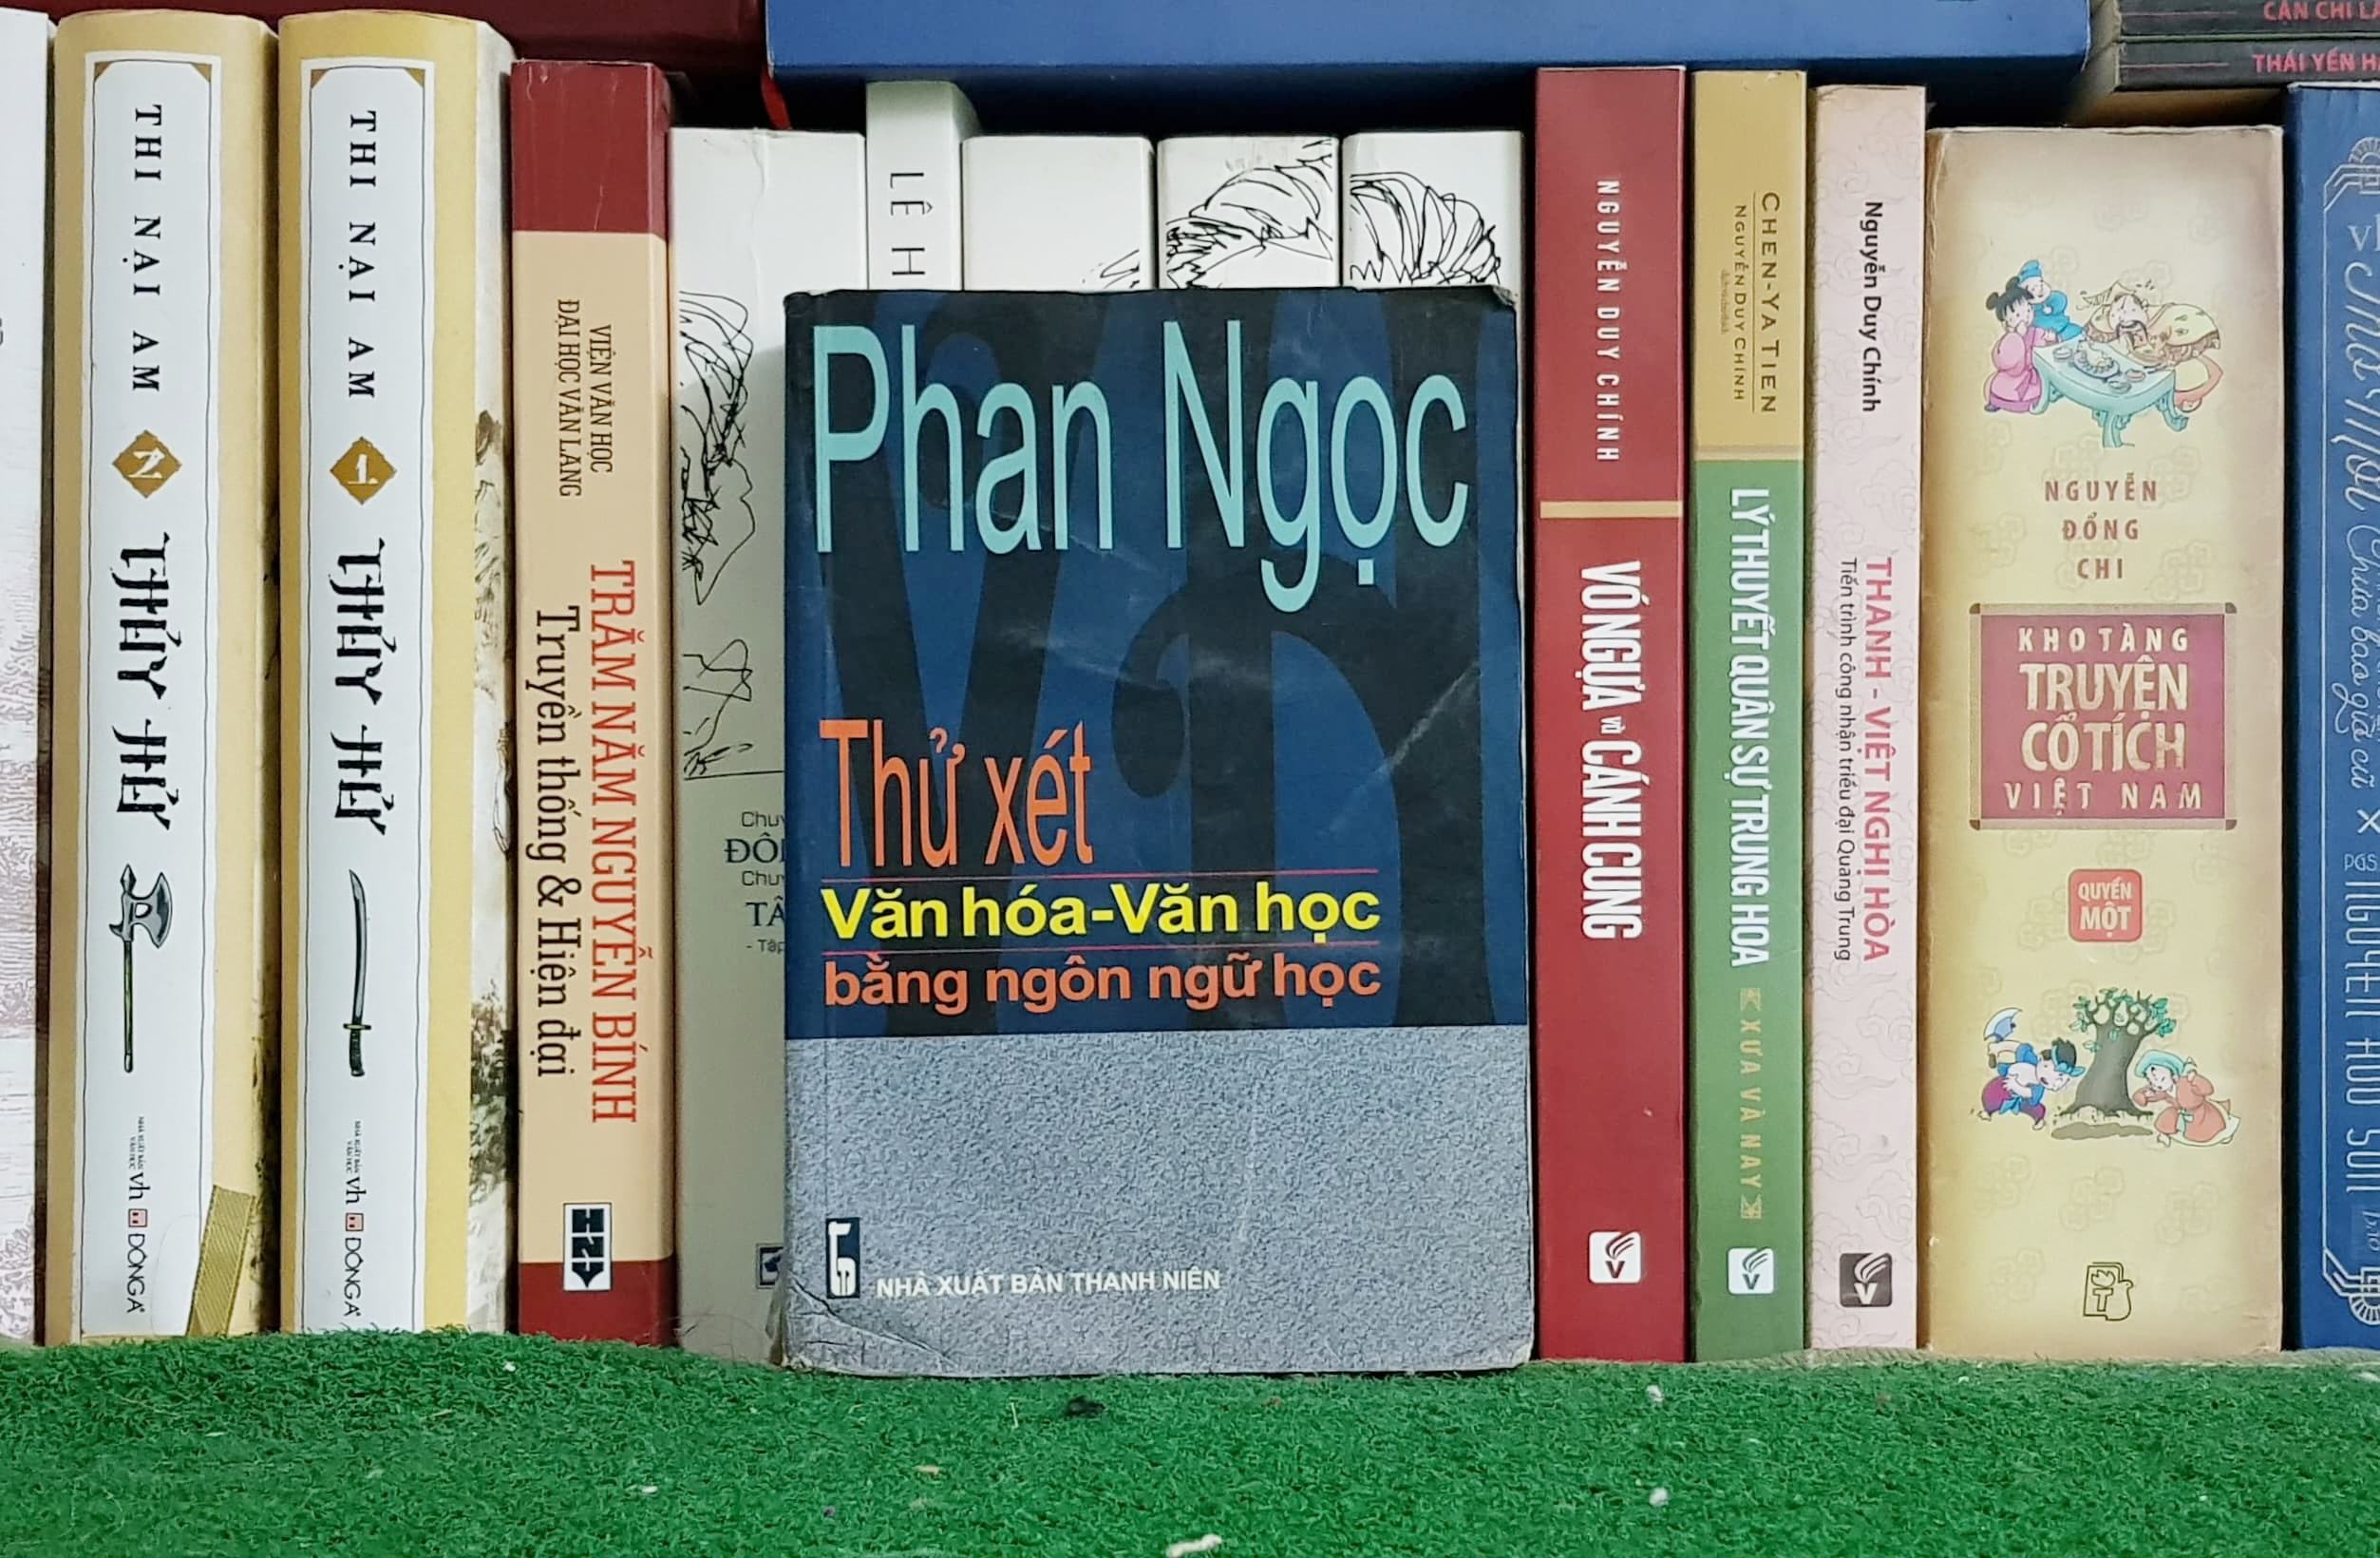 Sach cua Phan Ngoc anh 1